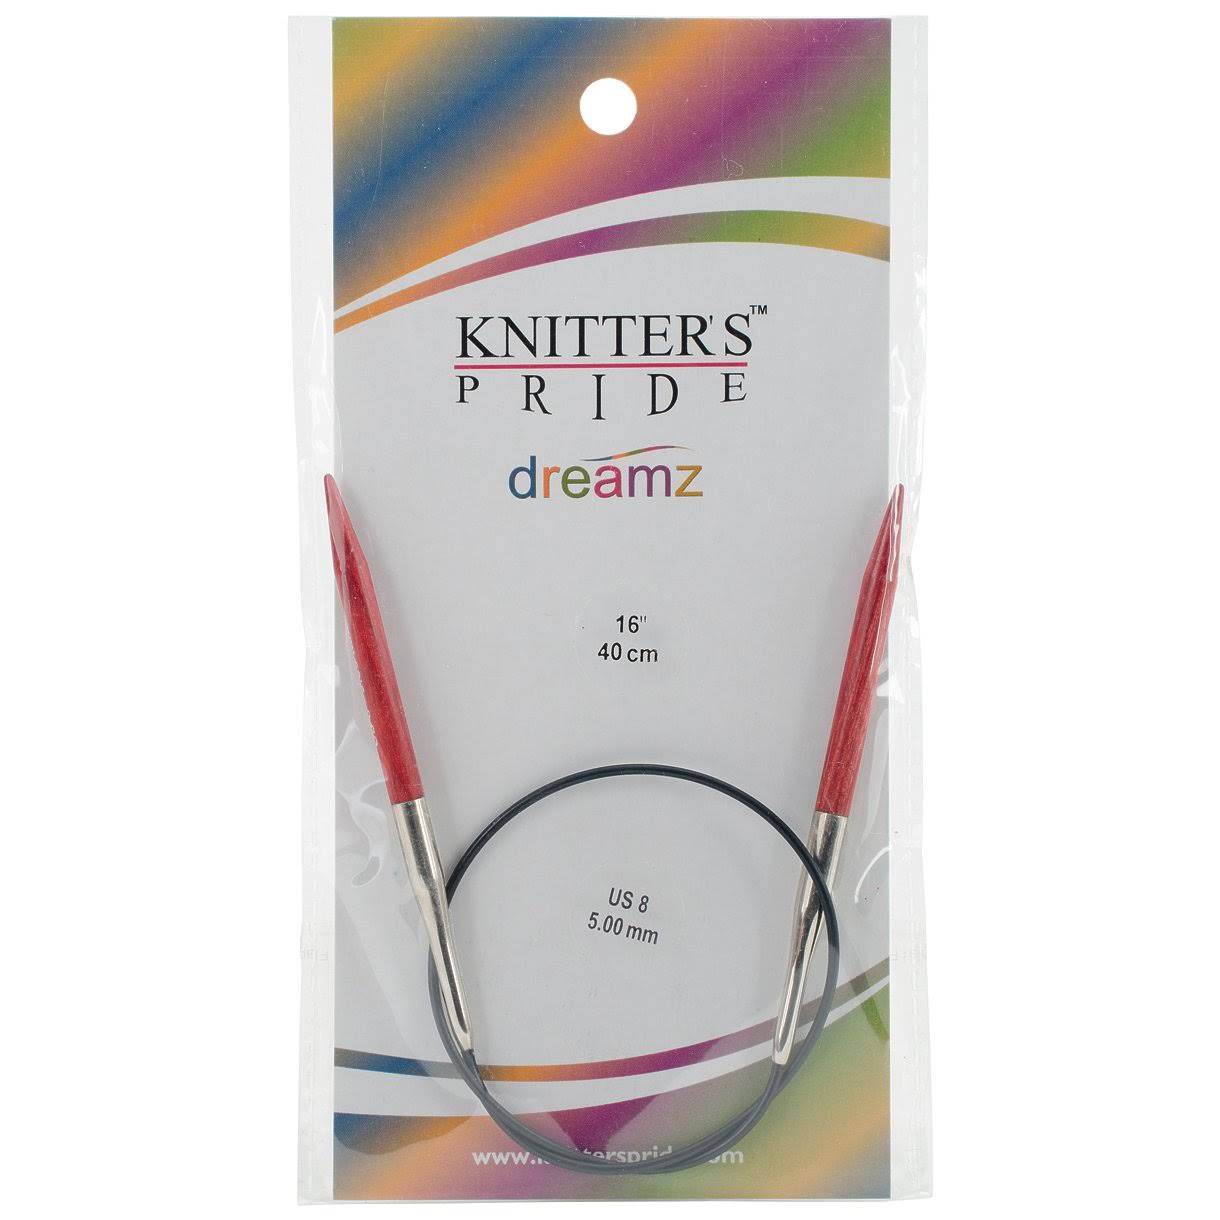 Knitter's Pride Dreamz Circular Knitting Needles - Size 8, 5mm